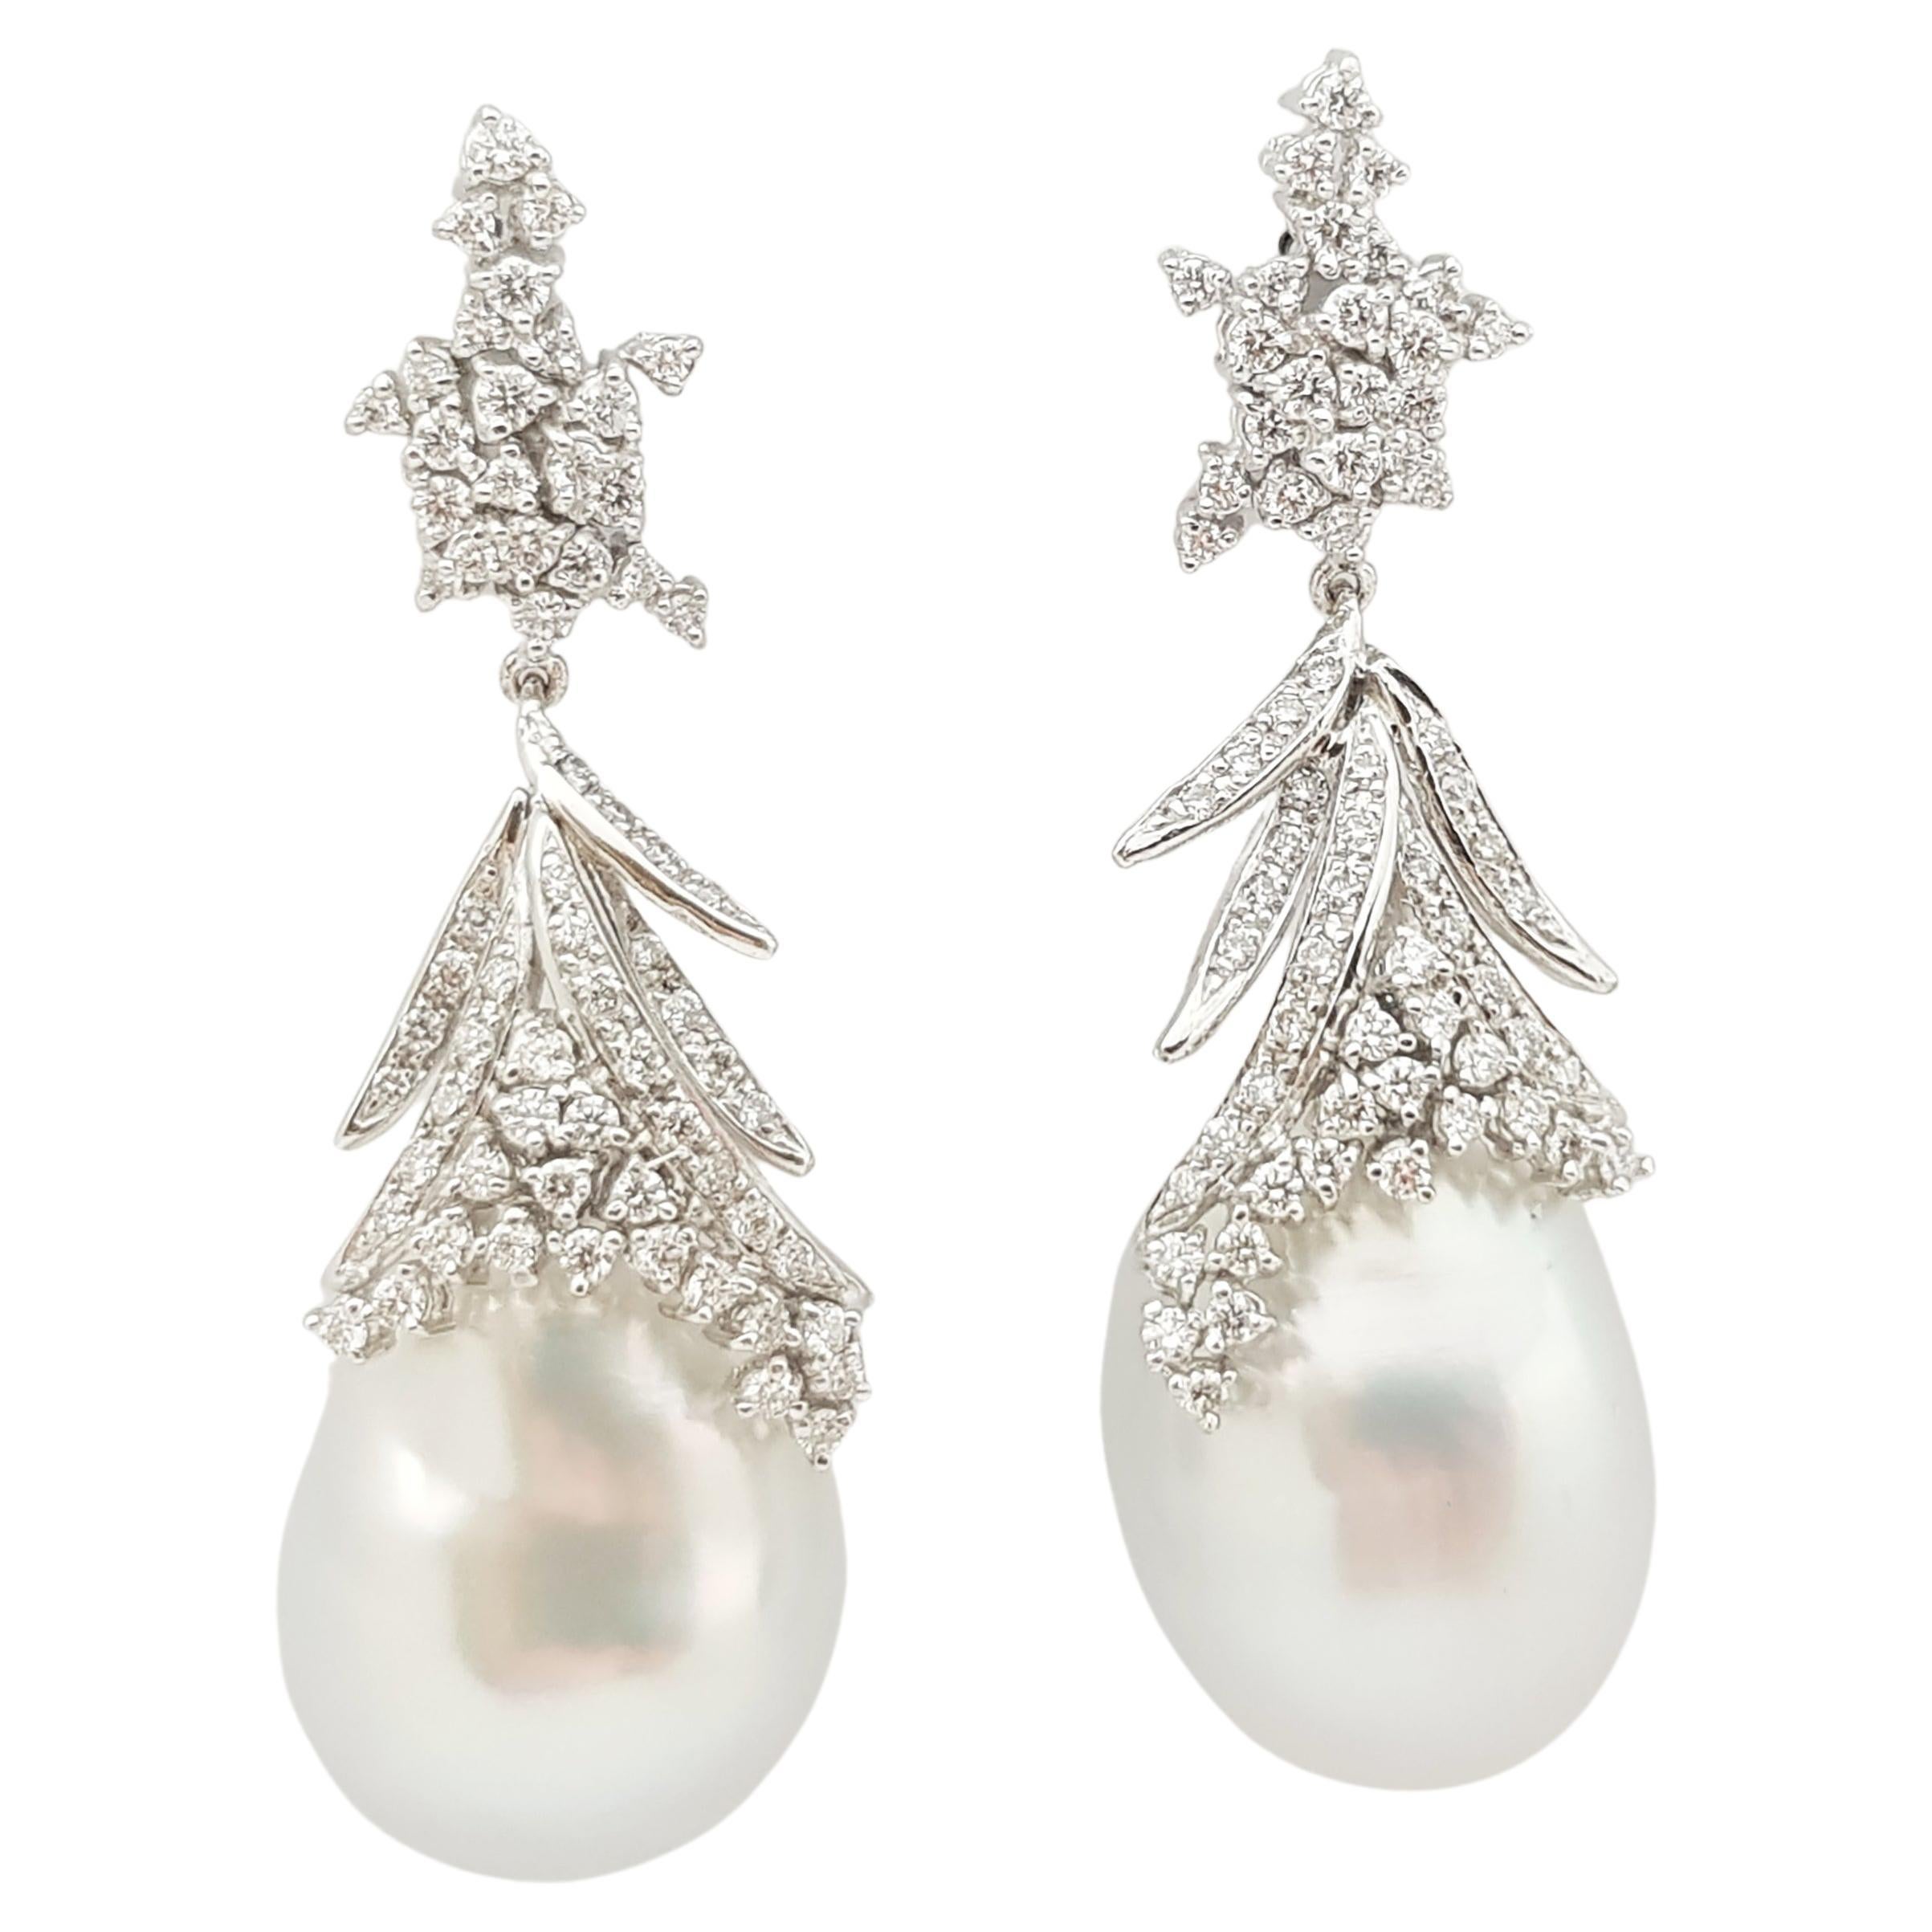 South Sea Pearl with Diamond Earrings Set in 18 Karat White Gold Set